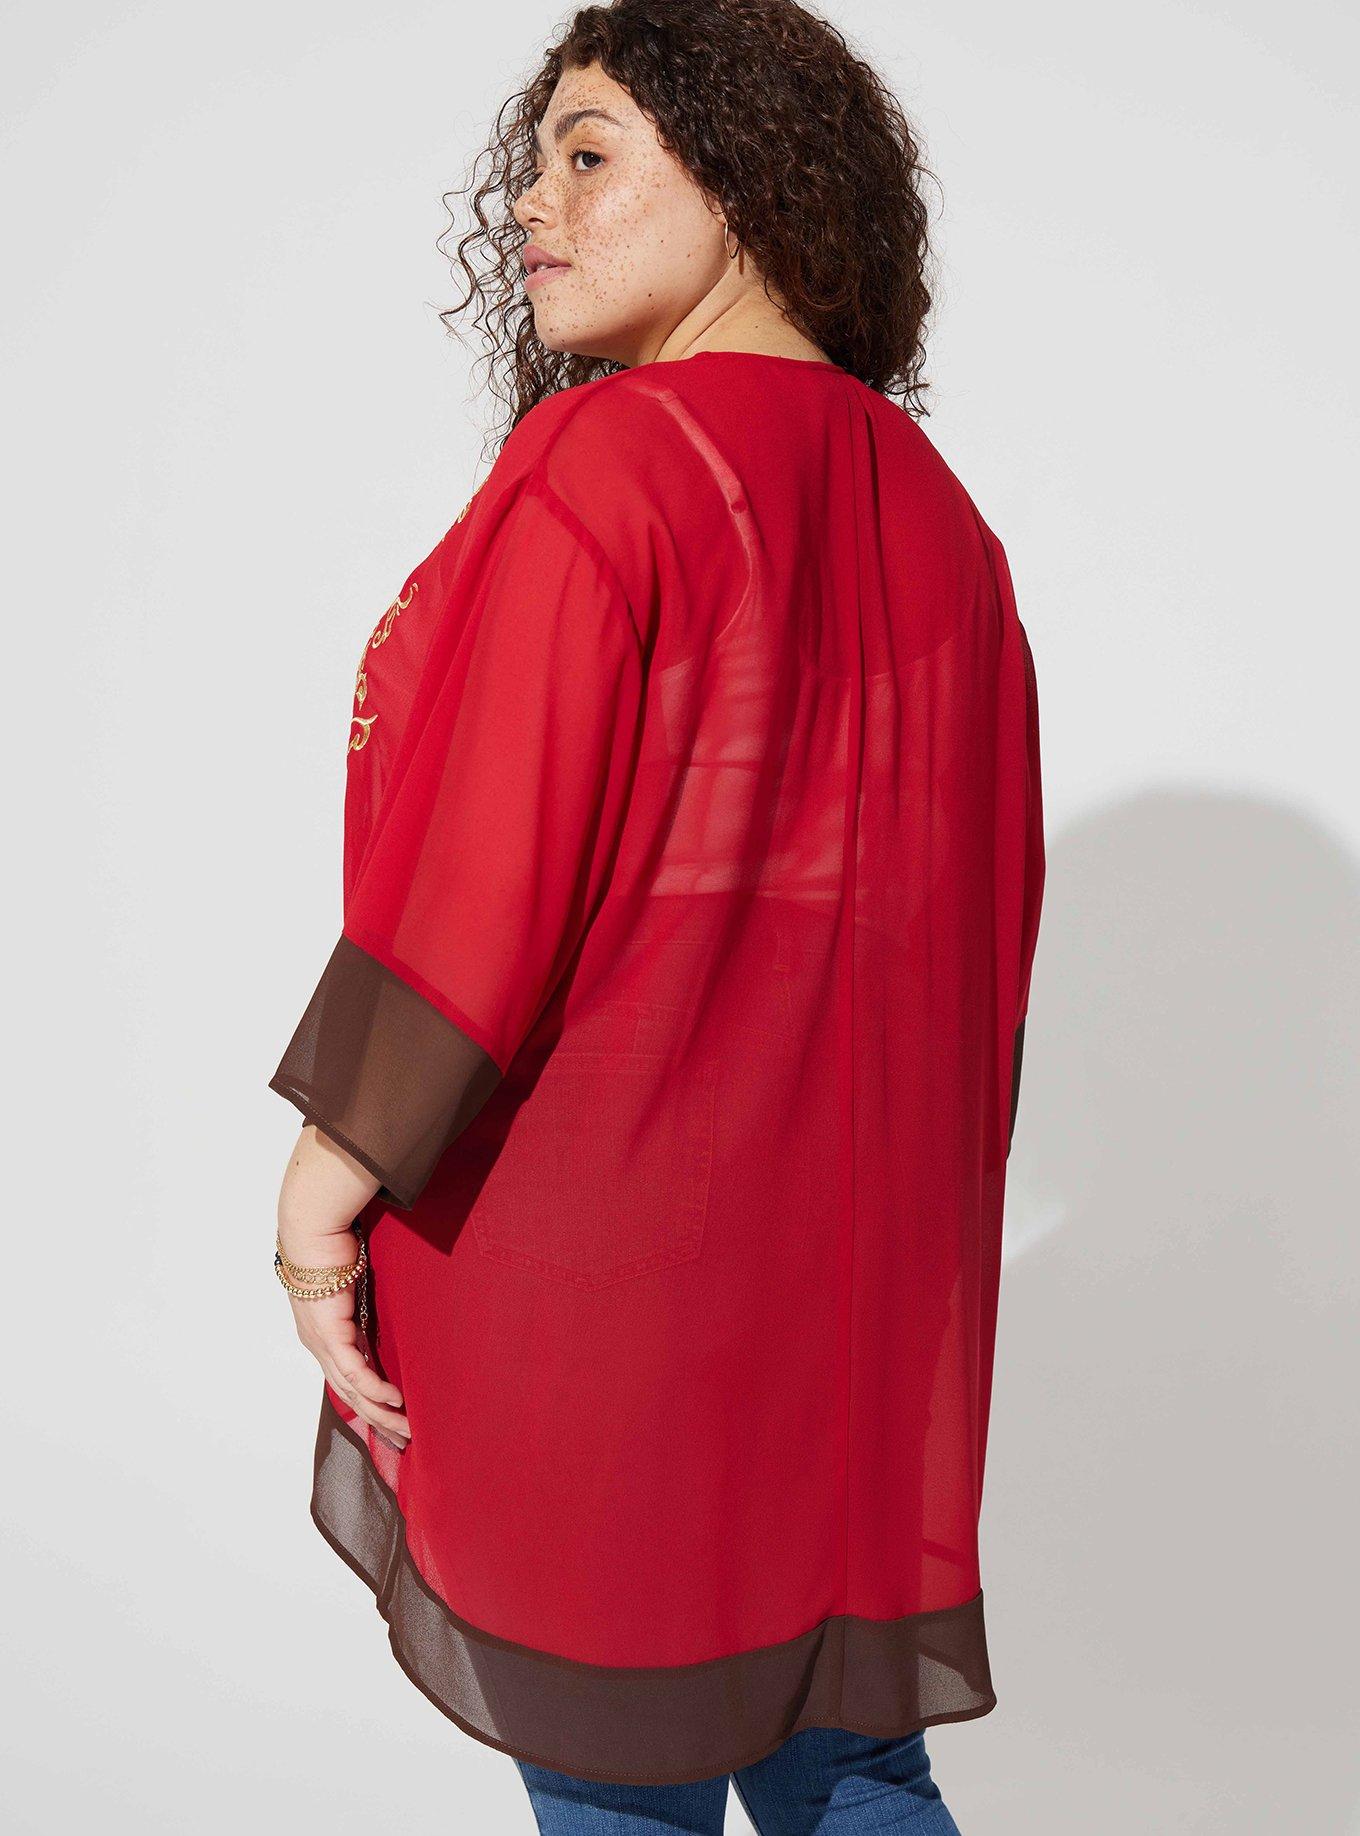 Padme Amidala Inspired Chiffon Cold Shoulder Dress -  Canada